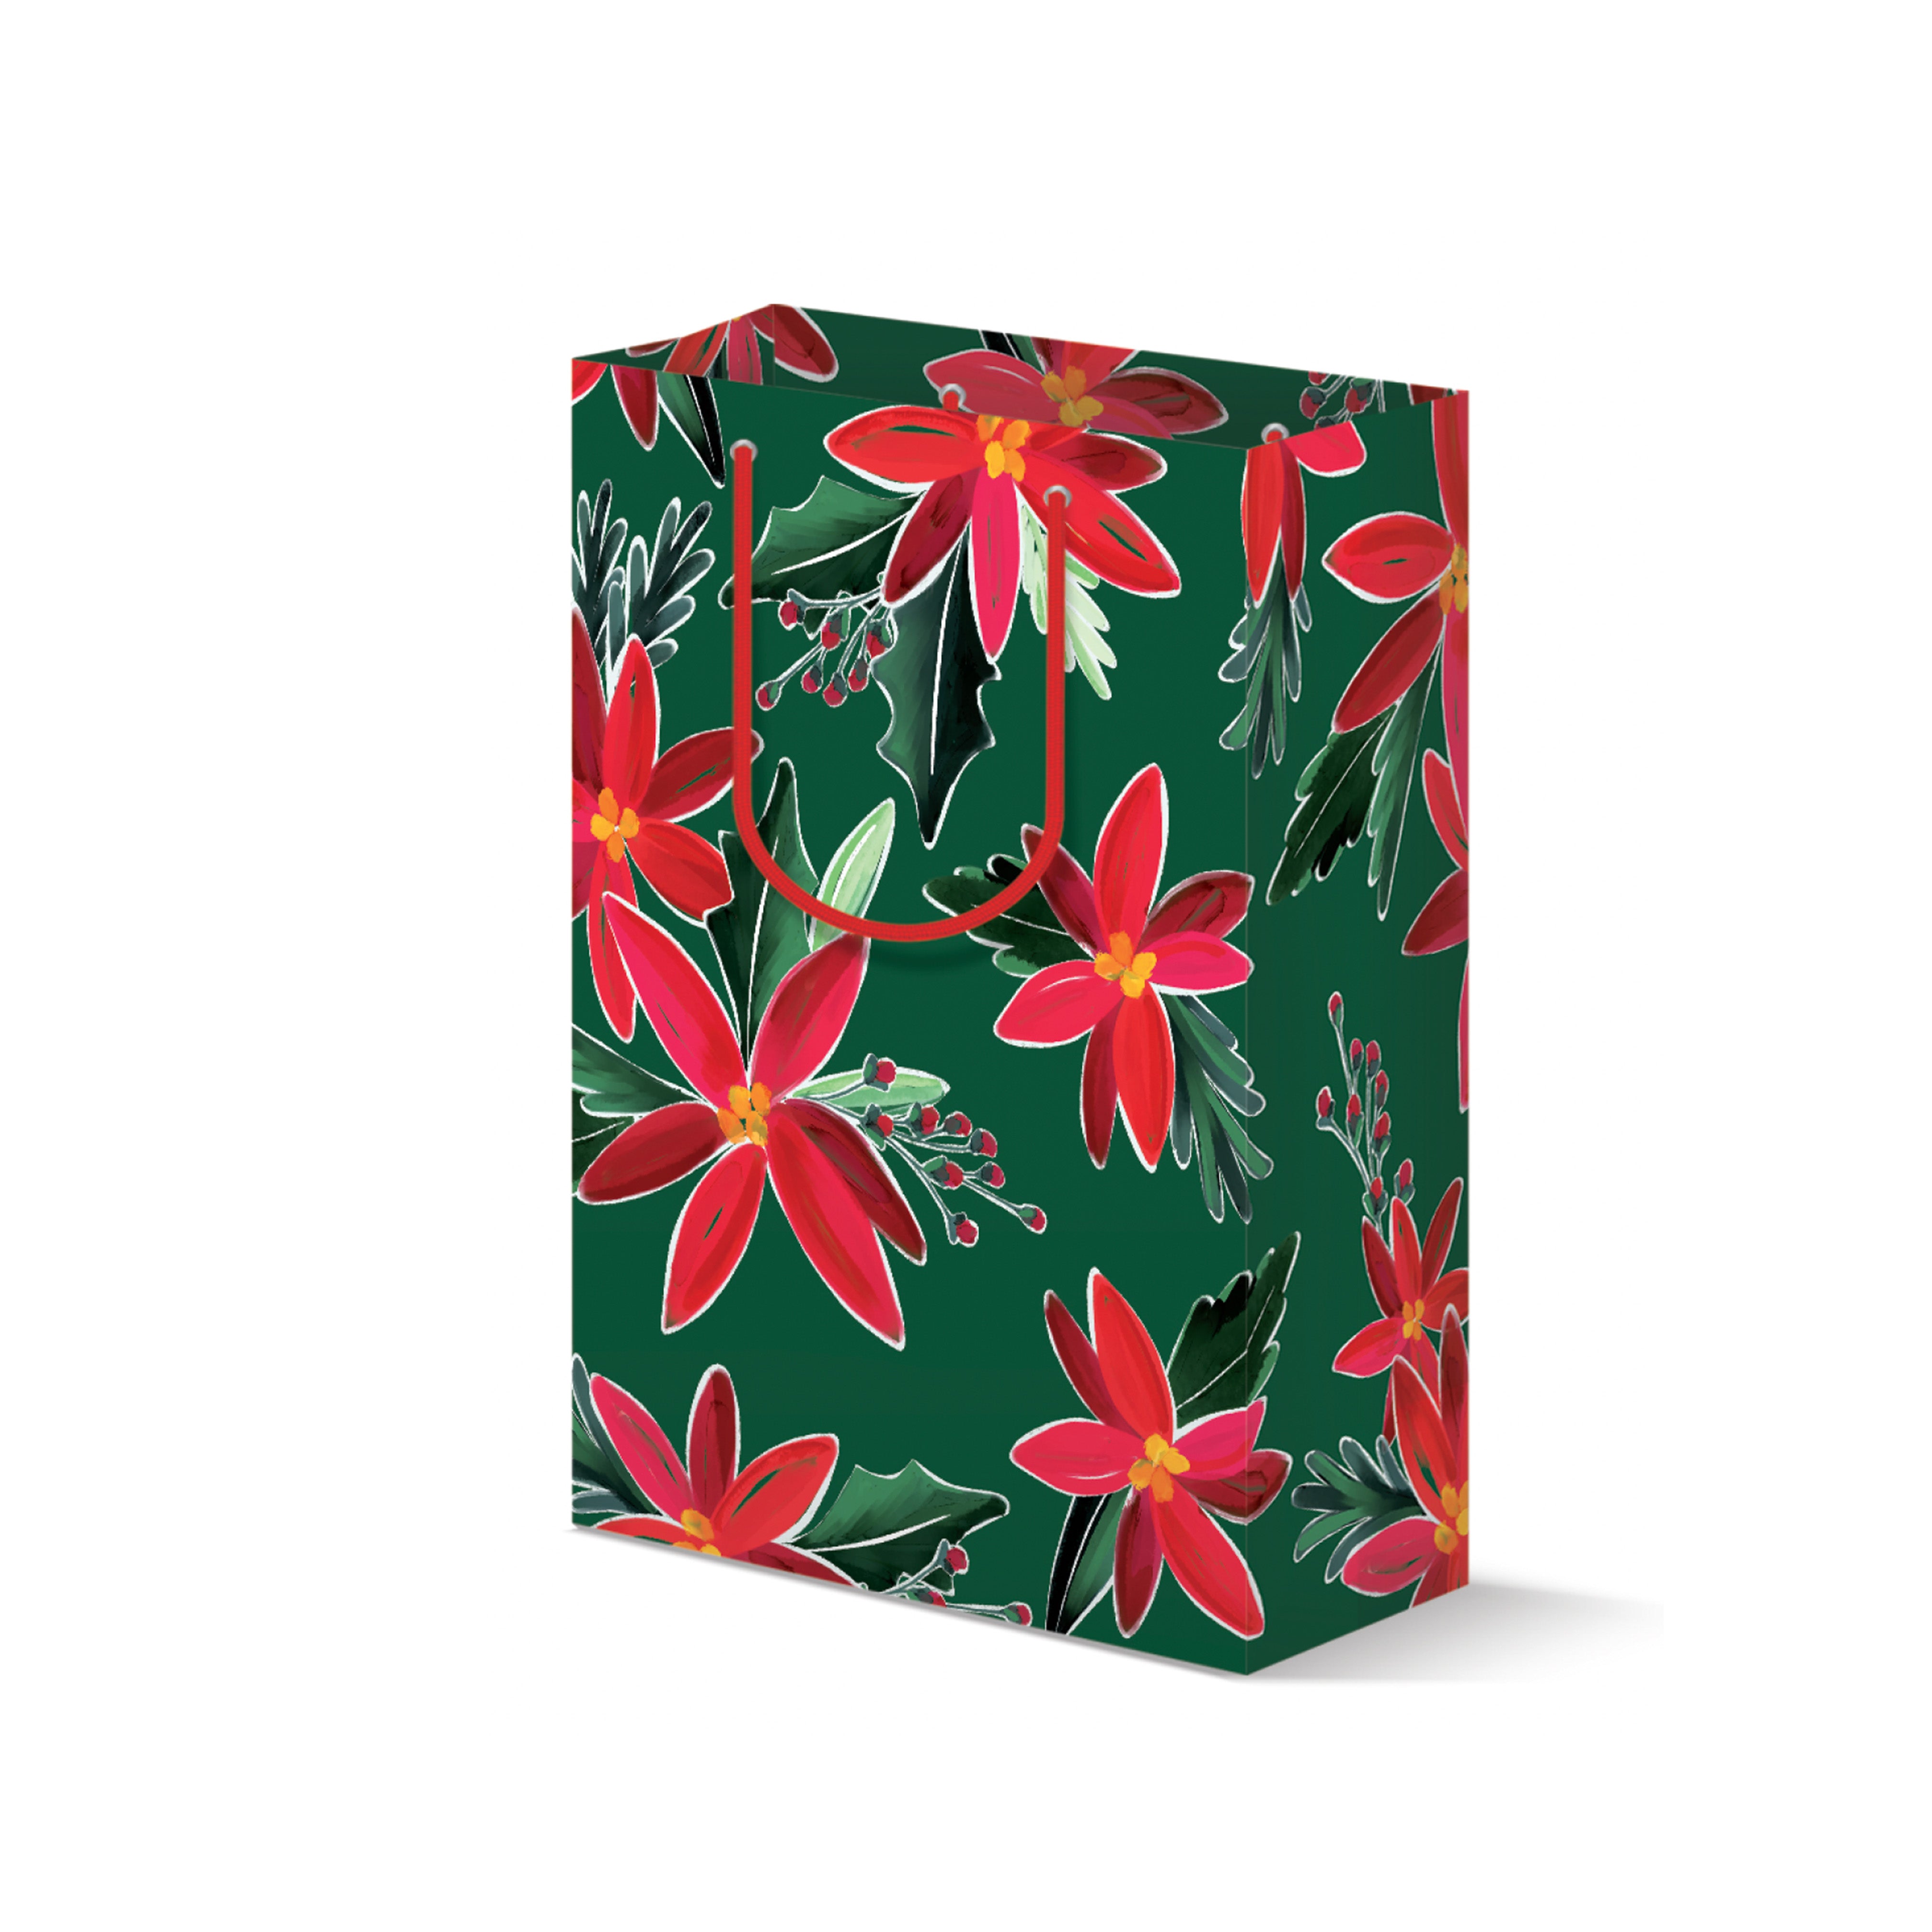 Poinsettias - Holiday Gift Bag